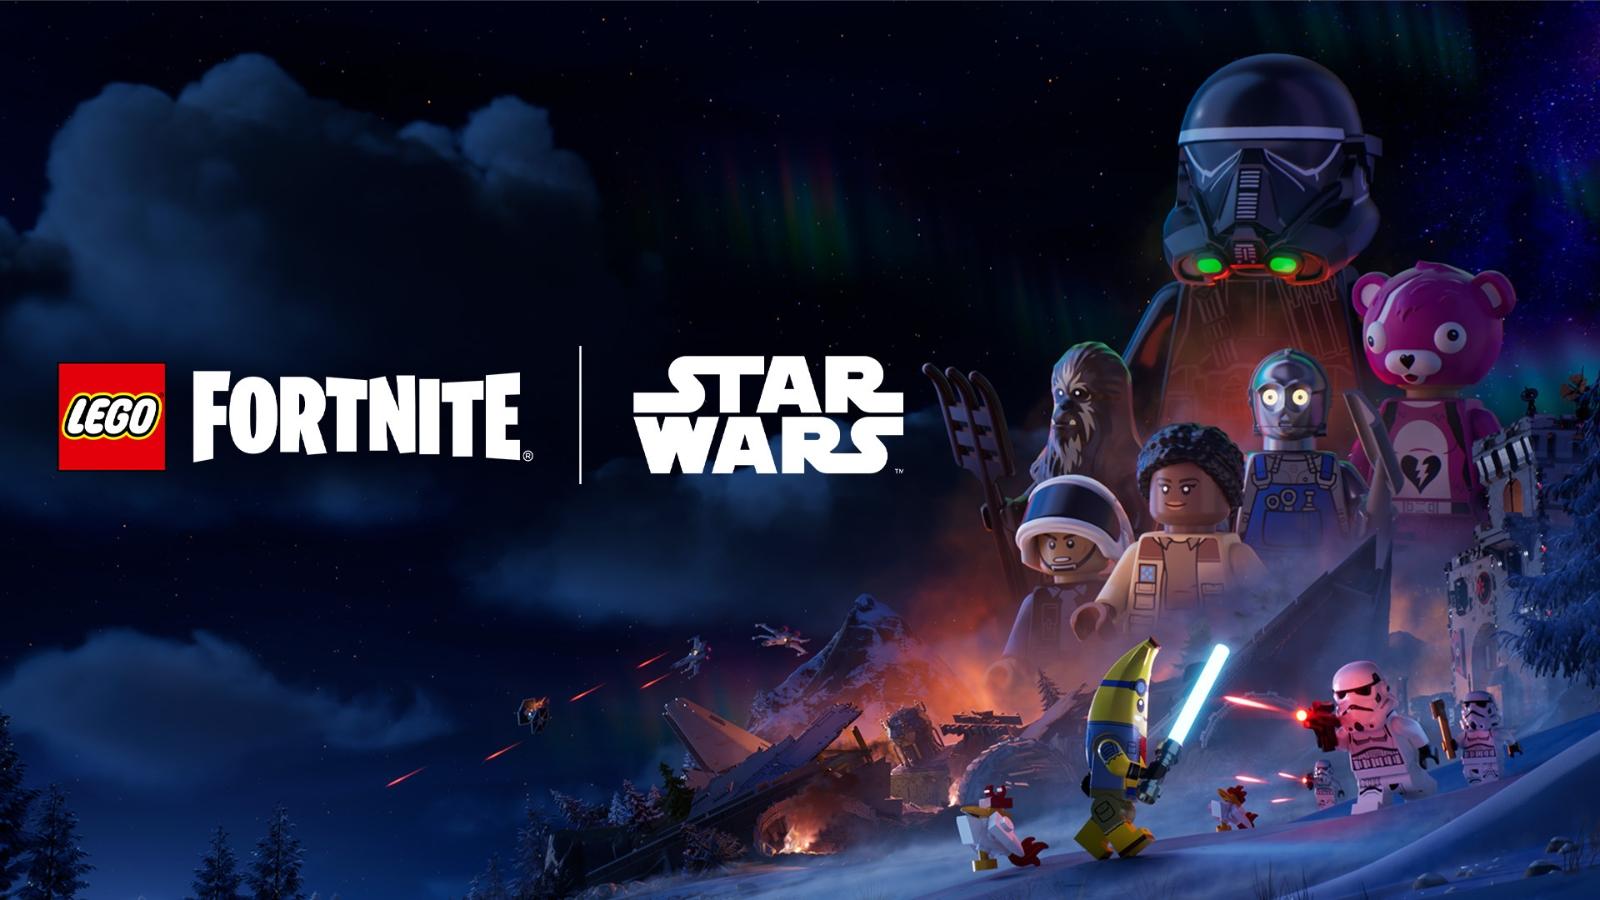 LEGO Fortnite Star Wars event cover